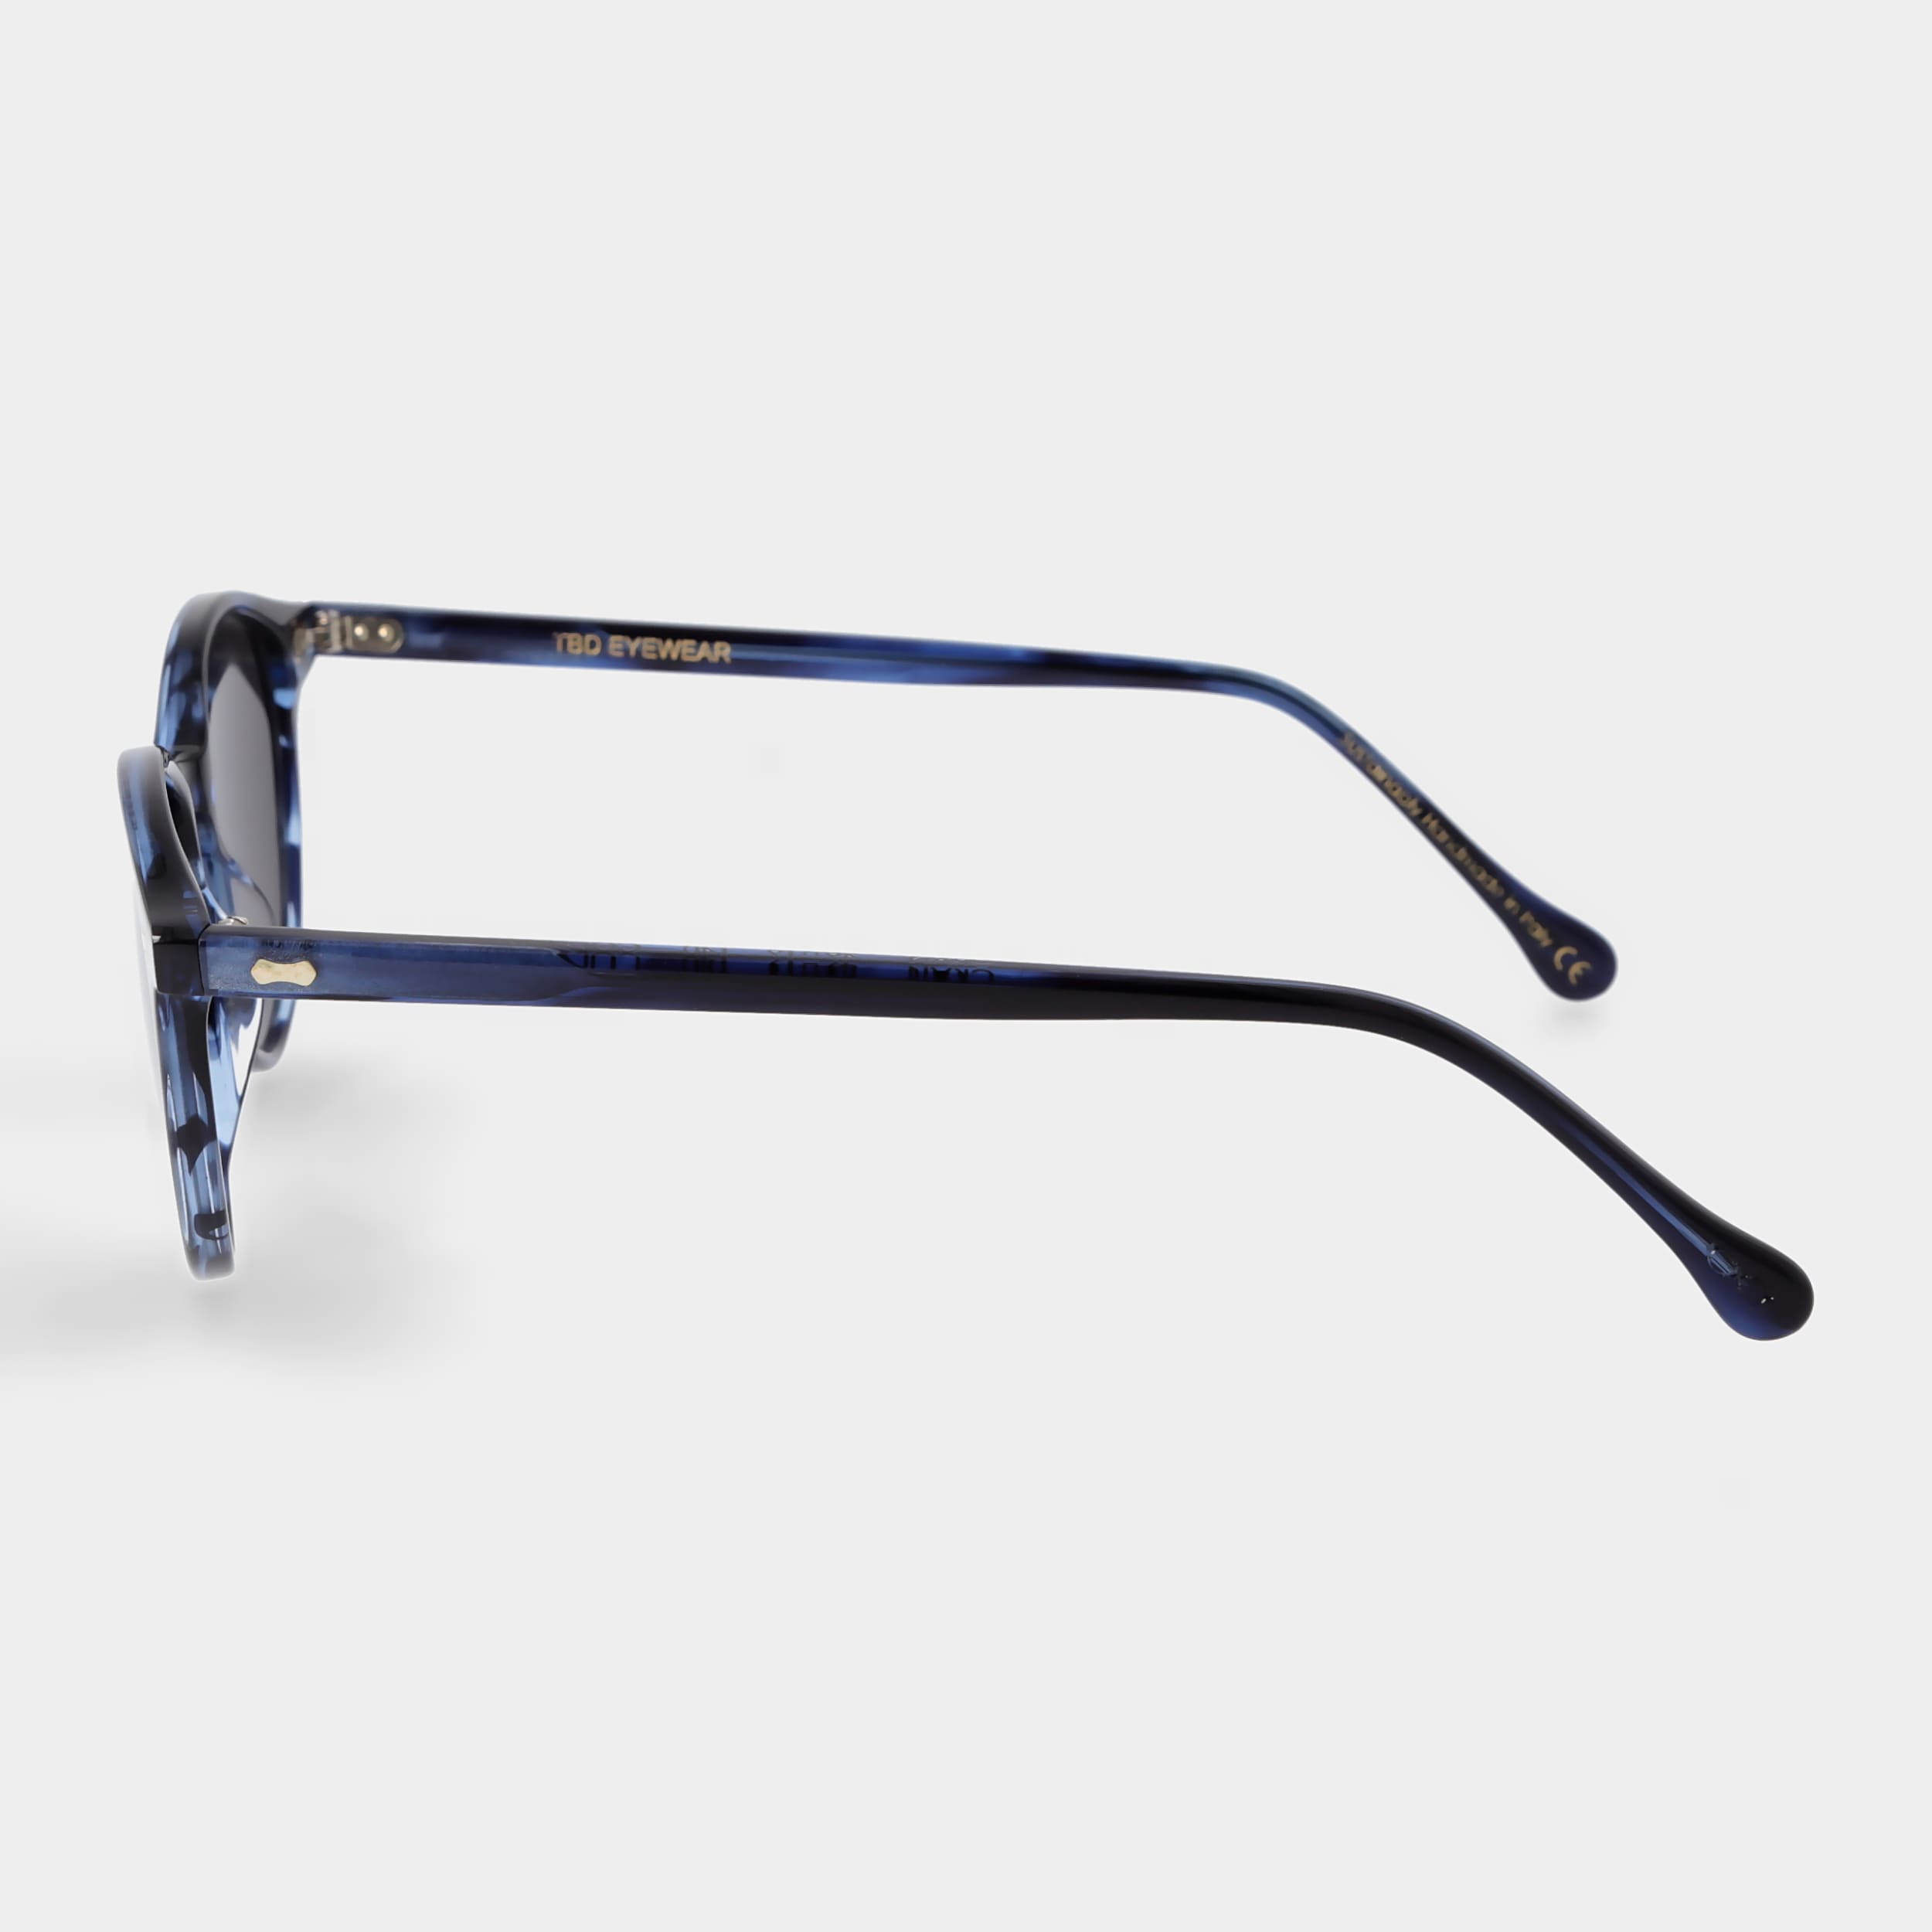 sunglasses-cran-ocean-gradient-grey-sustainable-tbd-eyewear-lateral